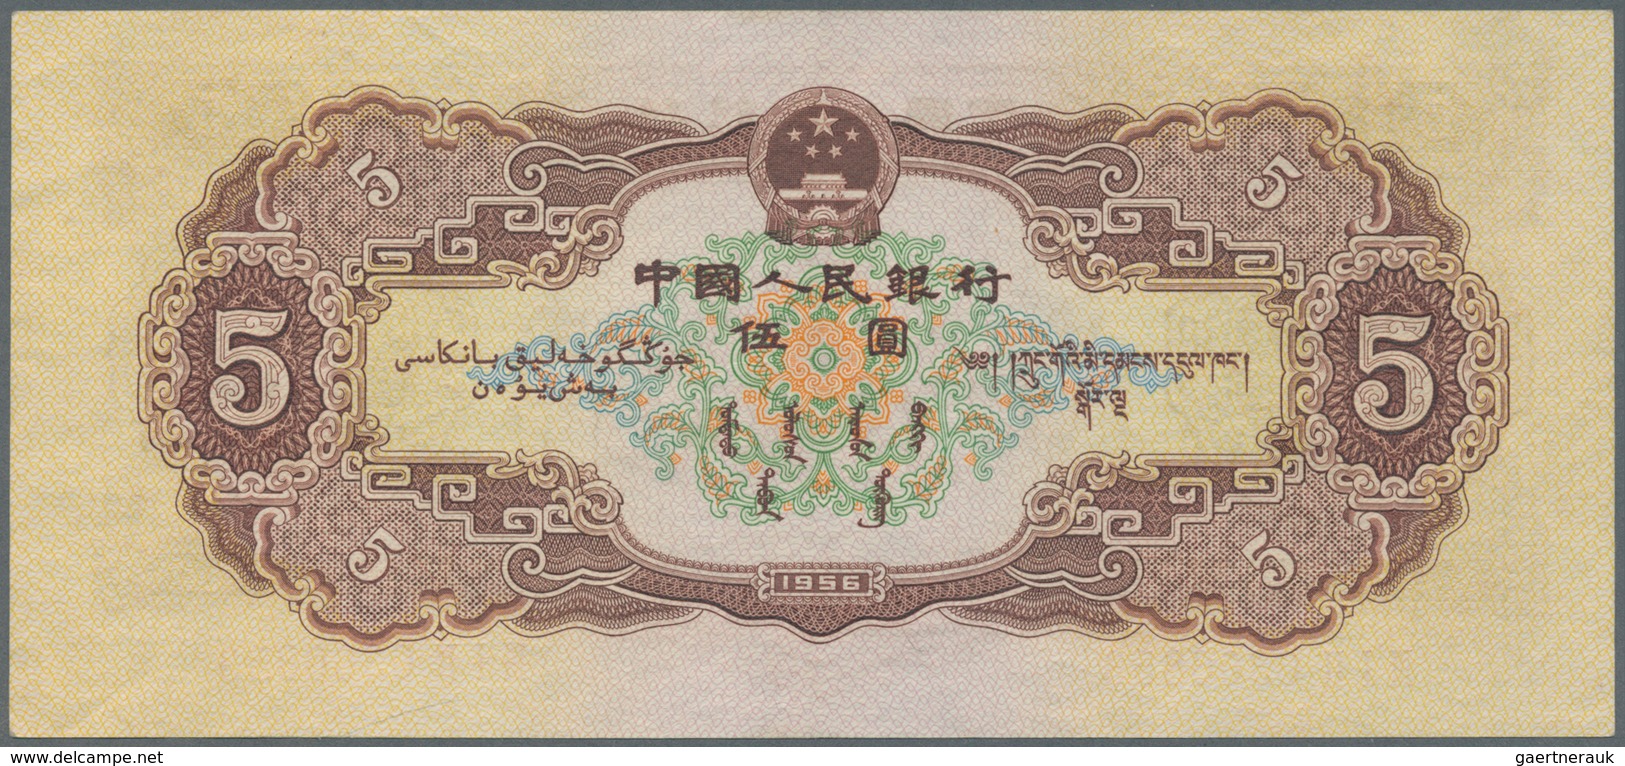 01302 China: 5 Yuan 1956 P. 872, Light Center Bend But Crisp Original Paper And Colors, Original Note With - China